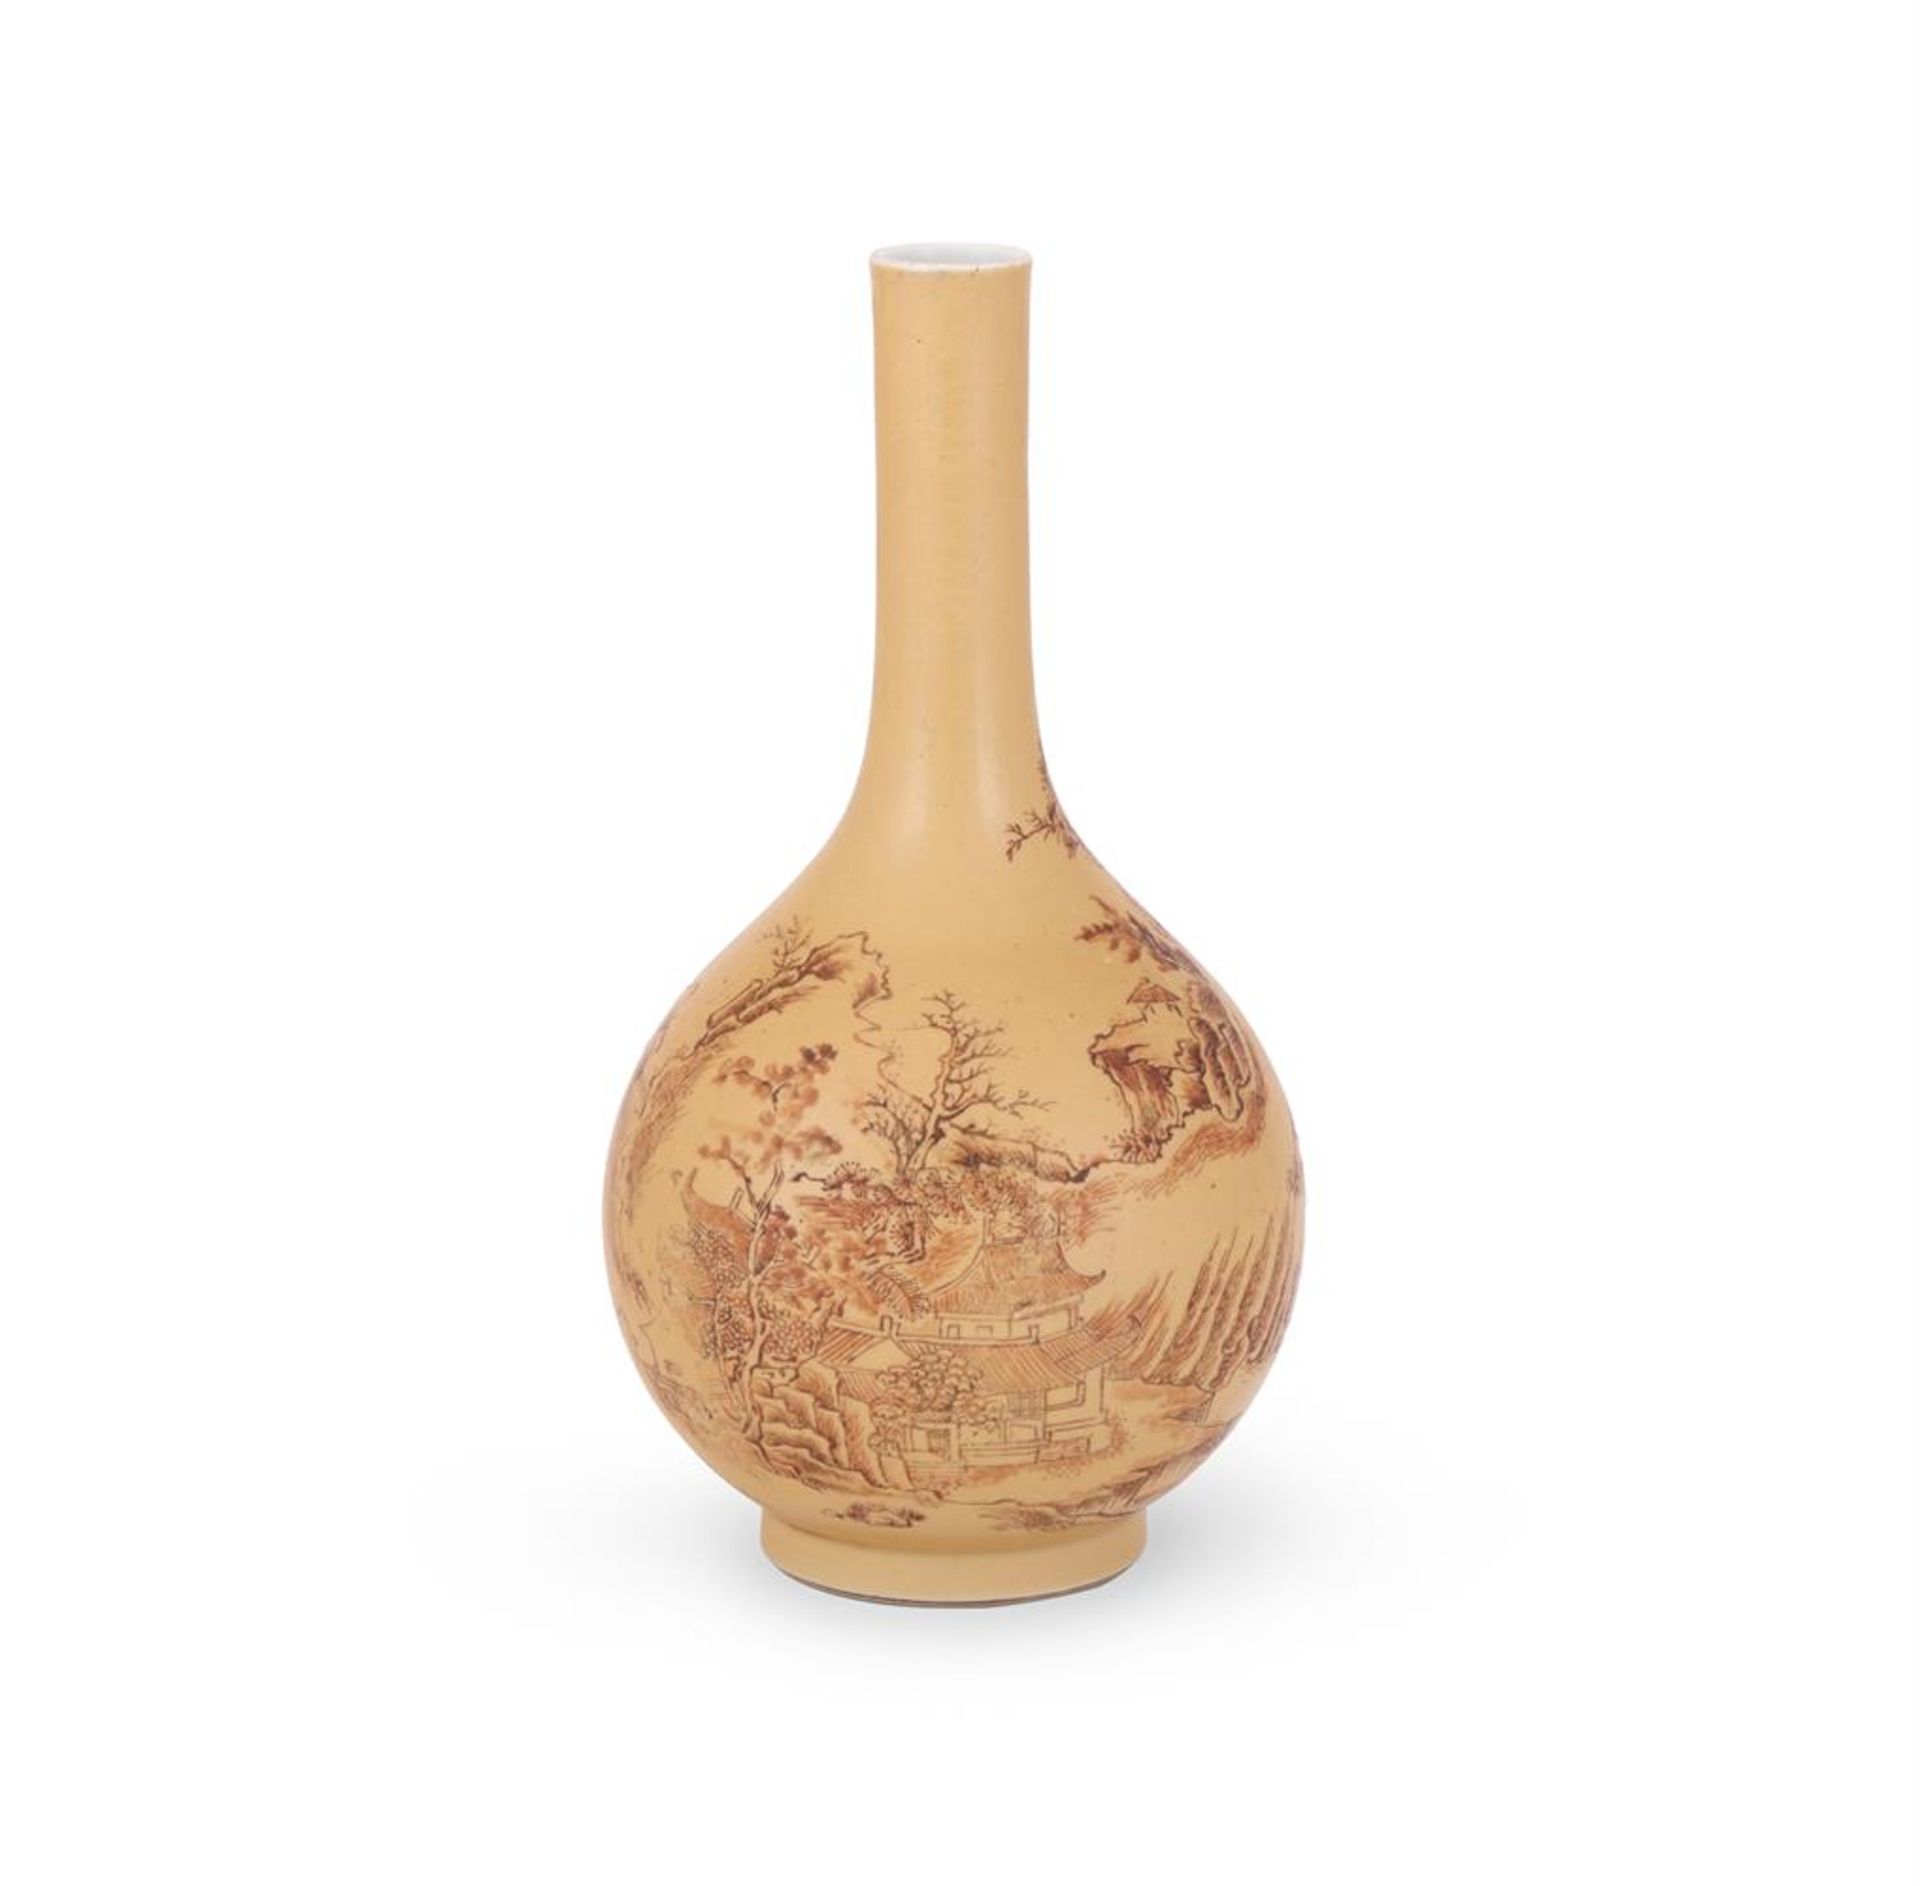 A Chinese amber-glazed 'Landscape' bottle vase